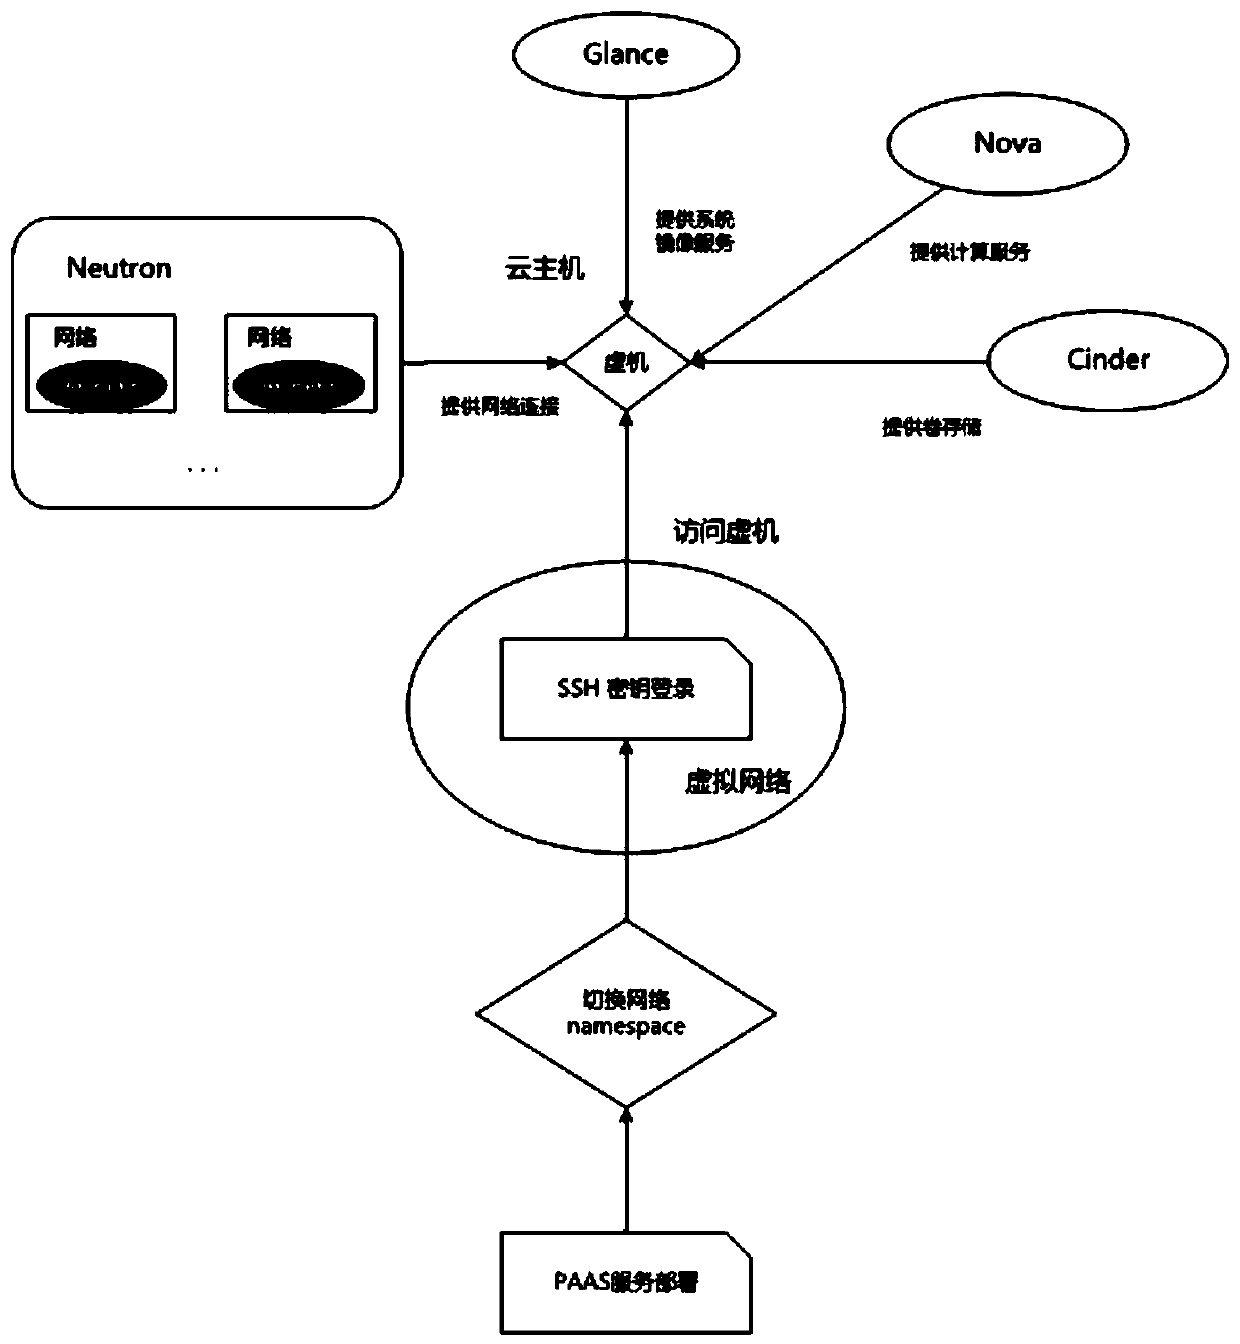 Virtual machine paas service management method based on intranet penetration